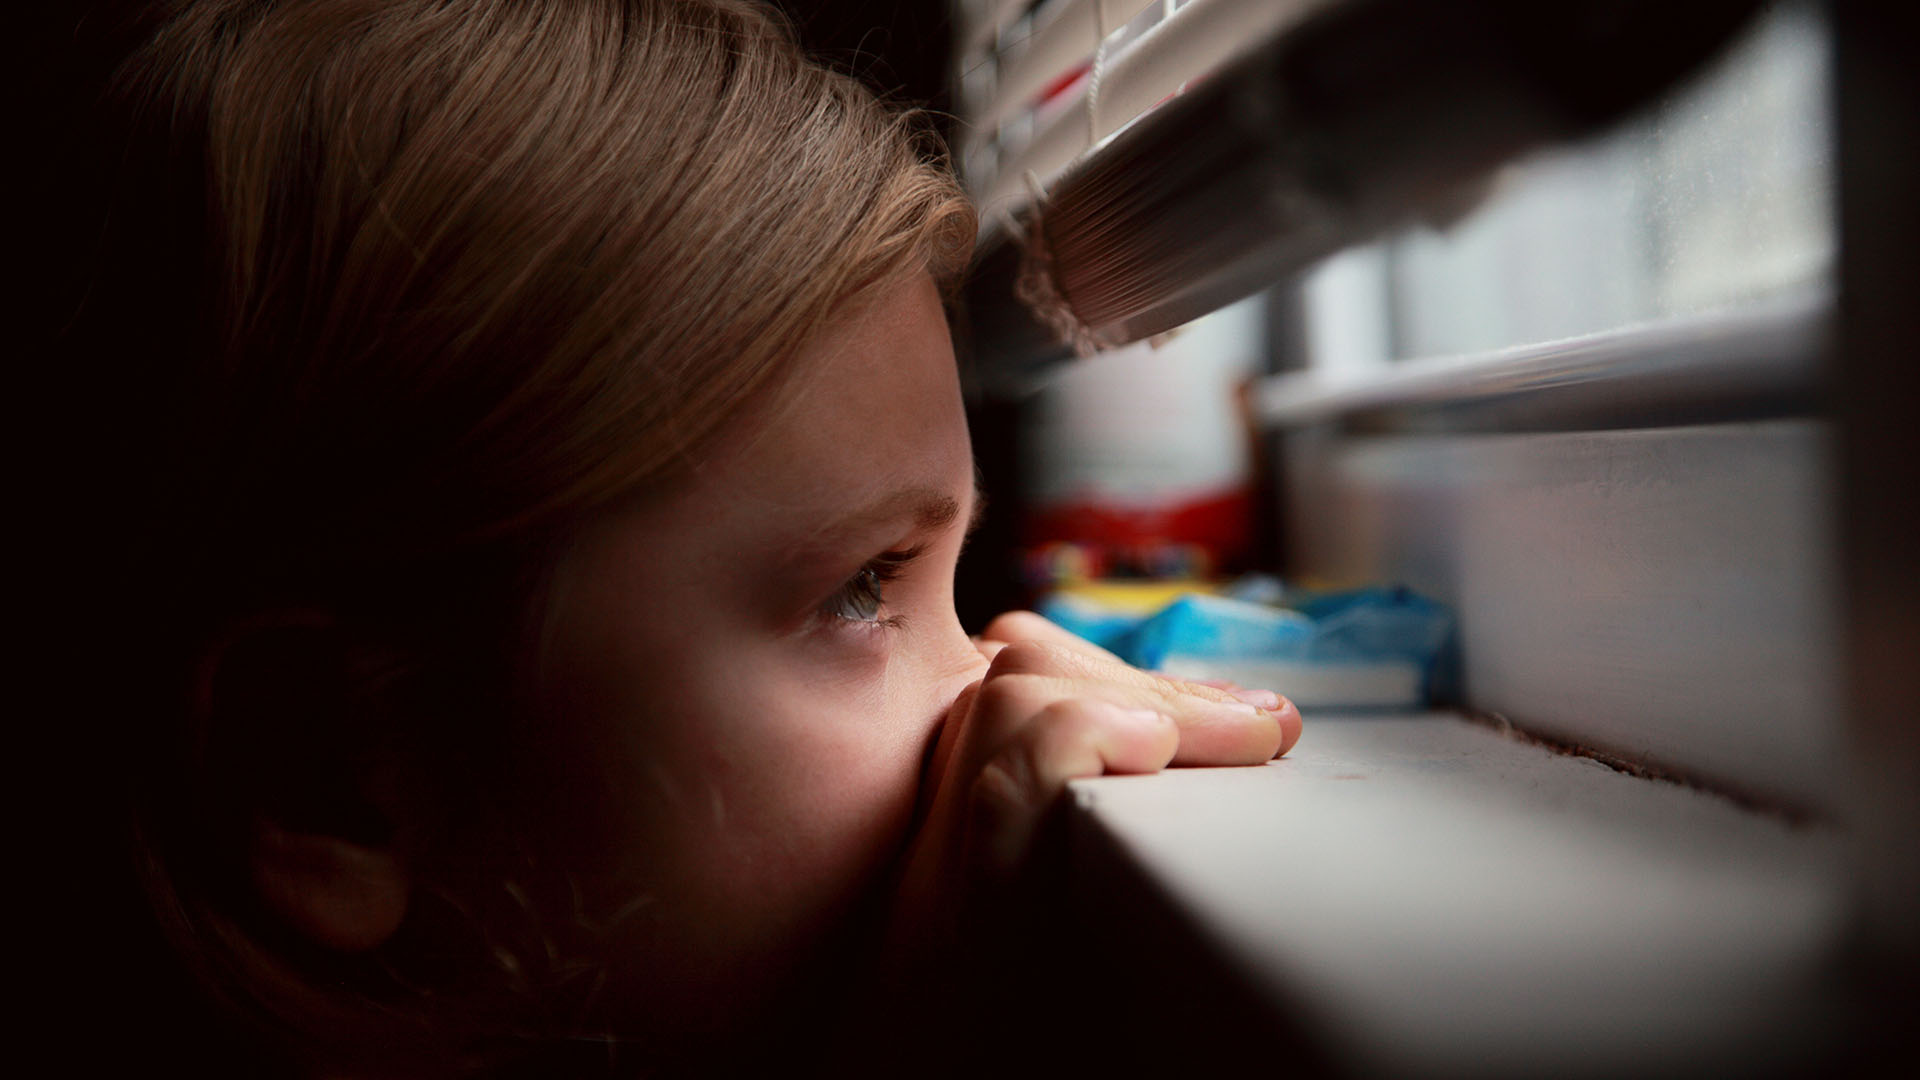 Girl looks out window during coronavirus self-quarantine